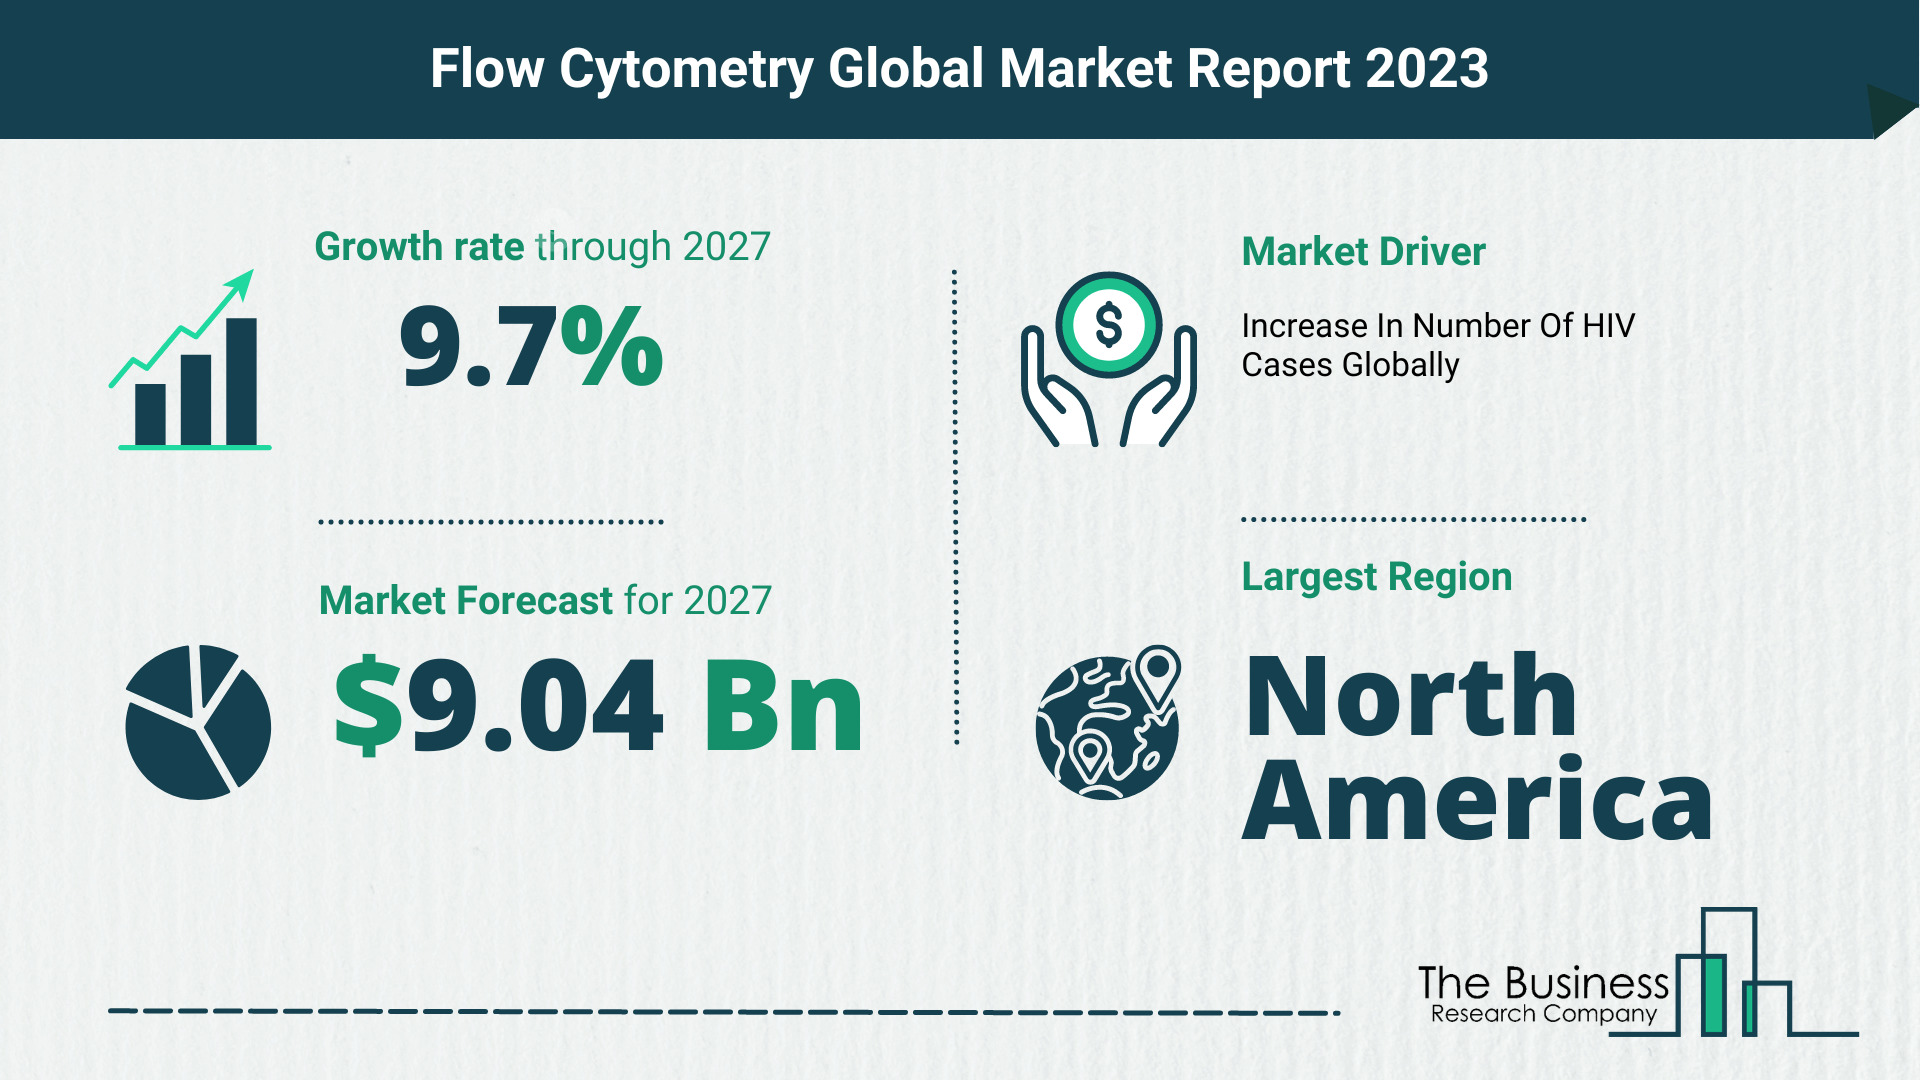 Global Flow Cytometry Market